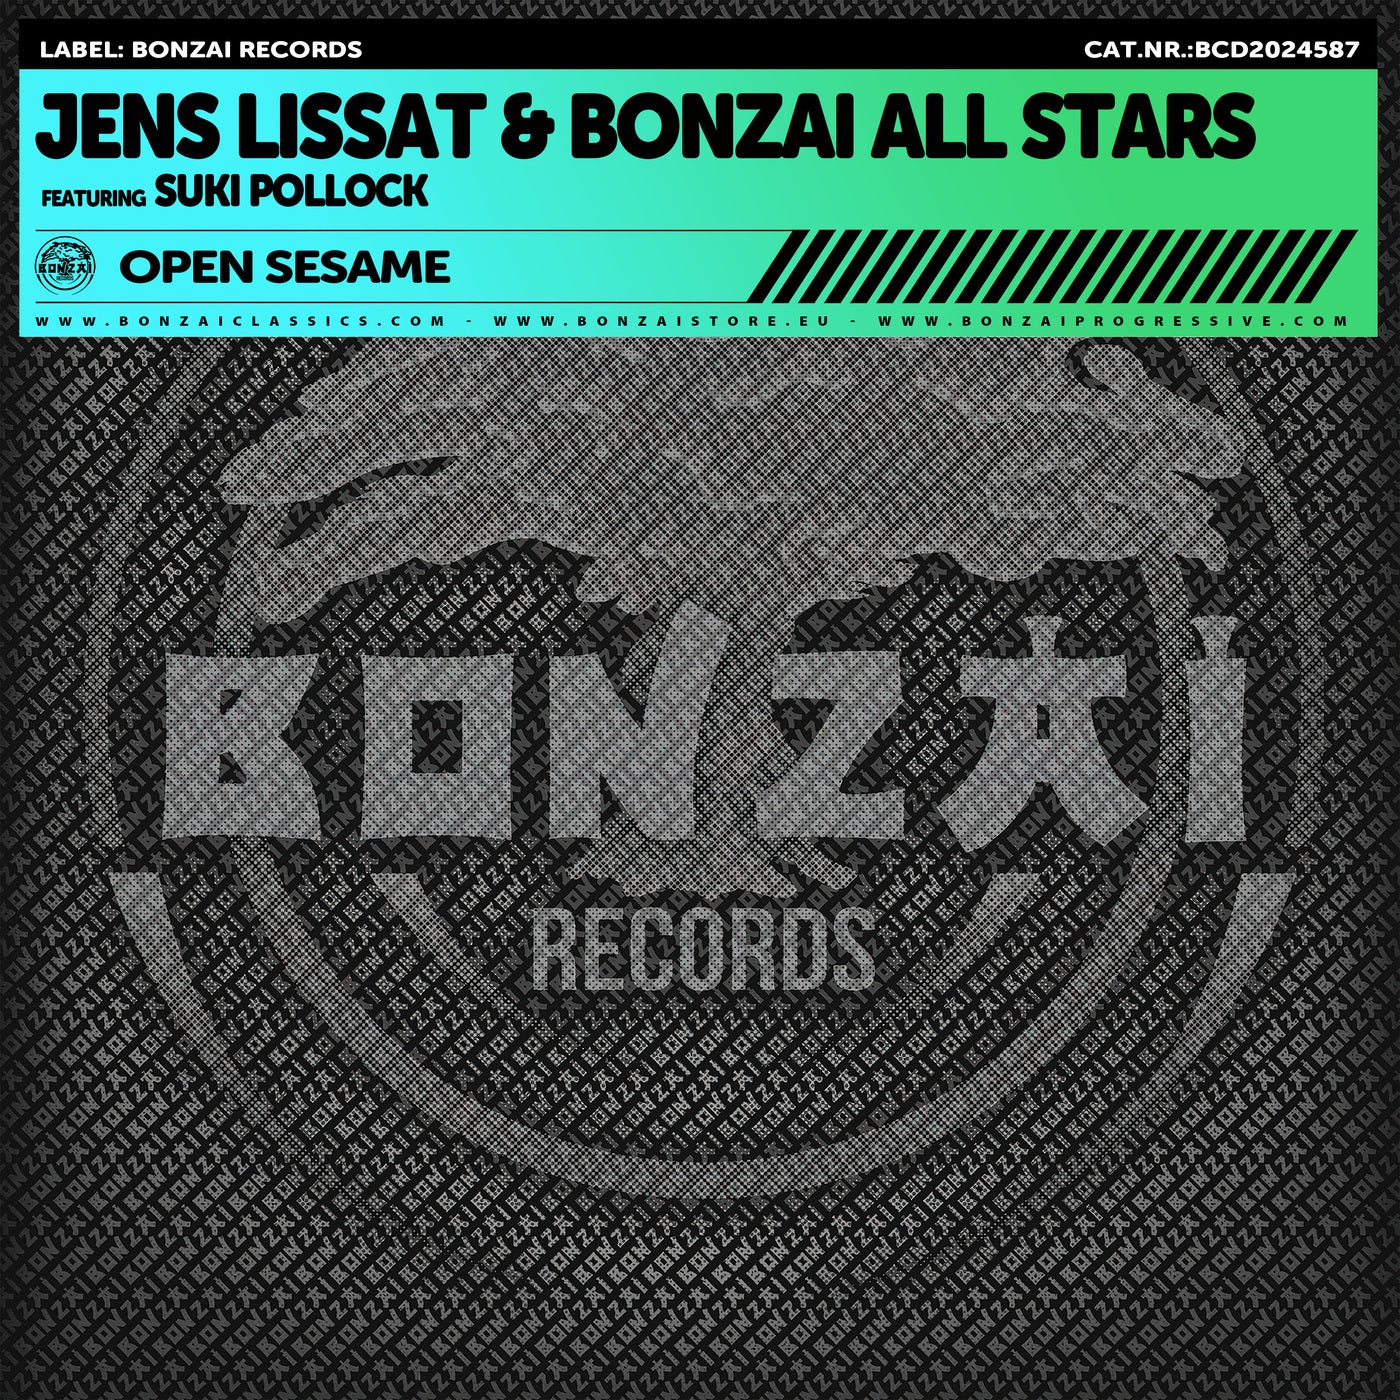 image cover: Jens Lissat, Bonzai All Stars, Suki Pollock - Open Sesame on Bonzai Classics